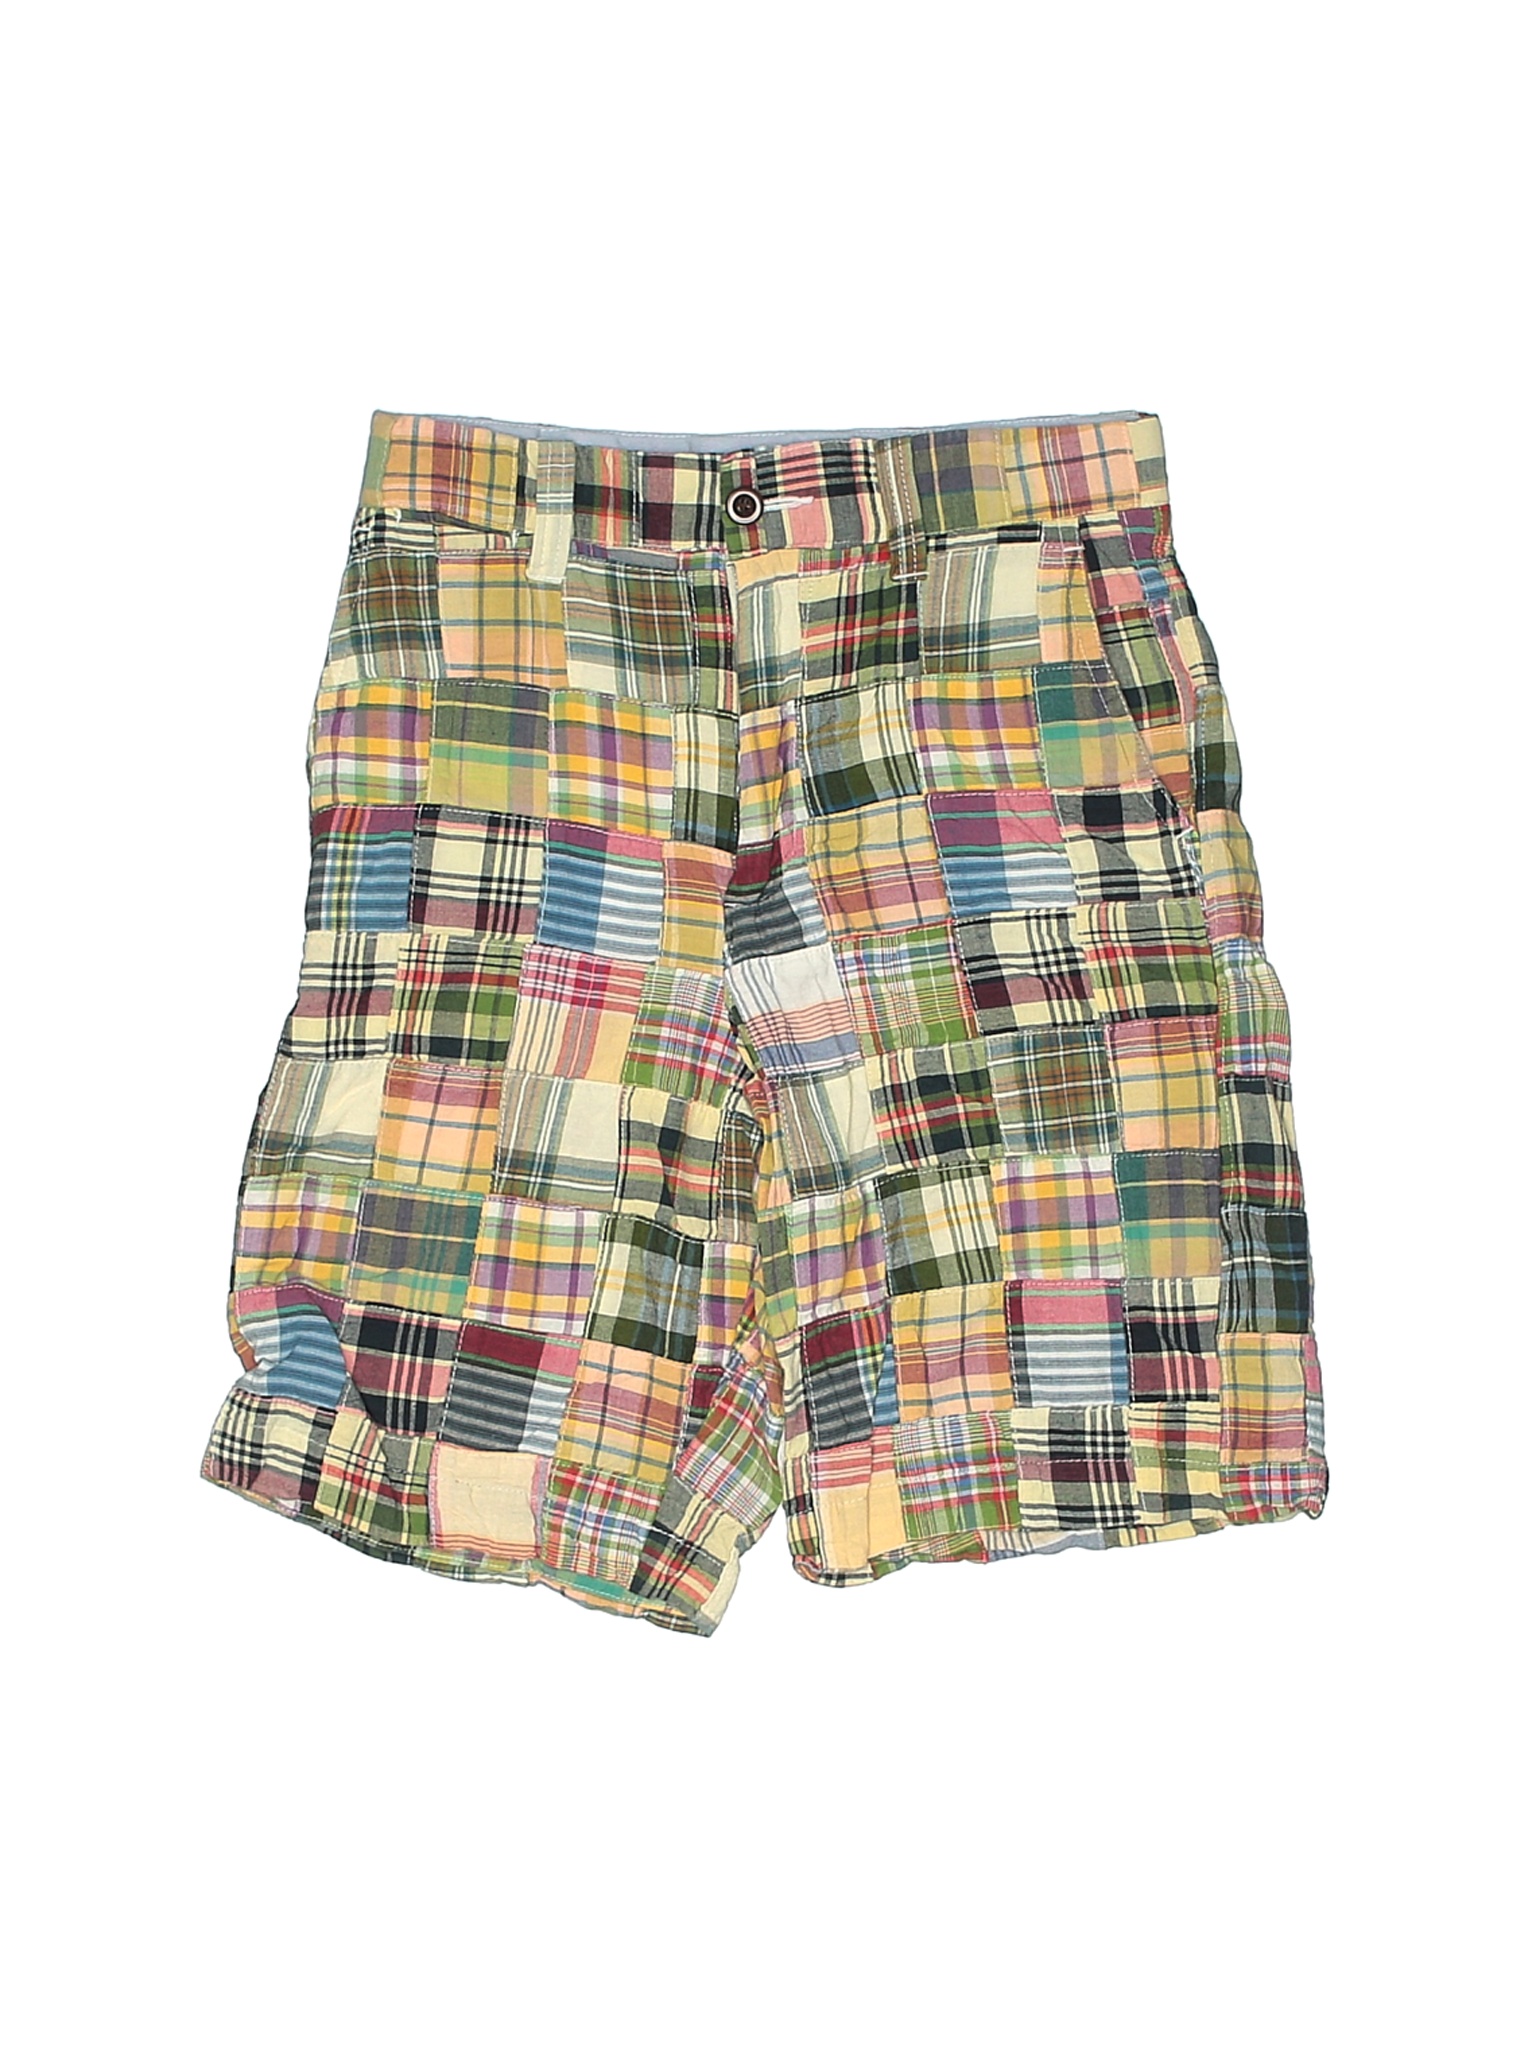 Crewcuts Boys Green Khaki Shorts 10 | eBay